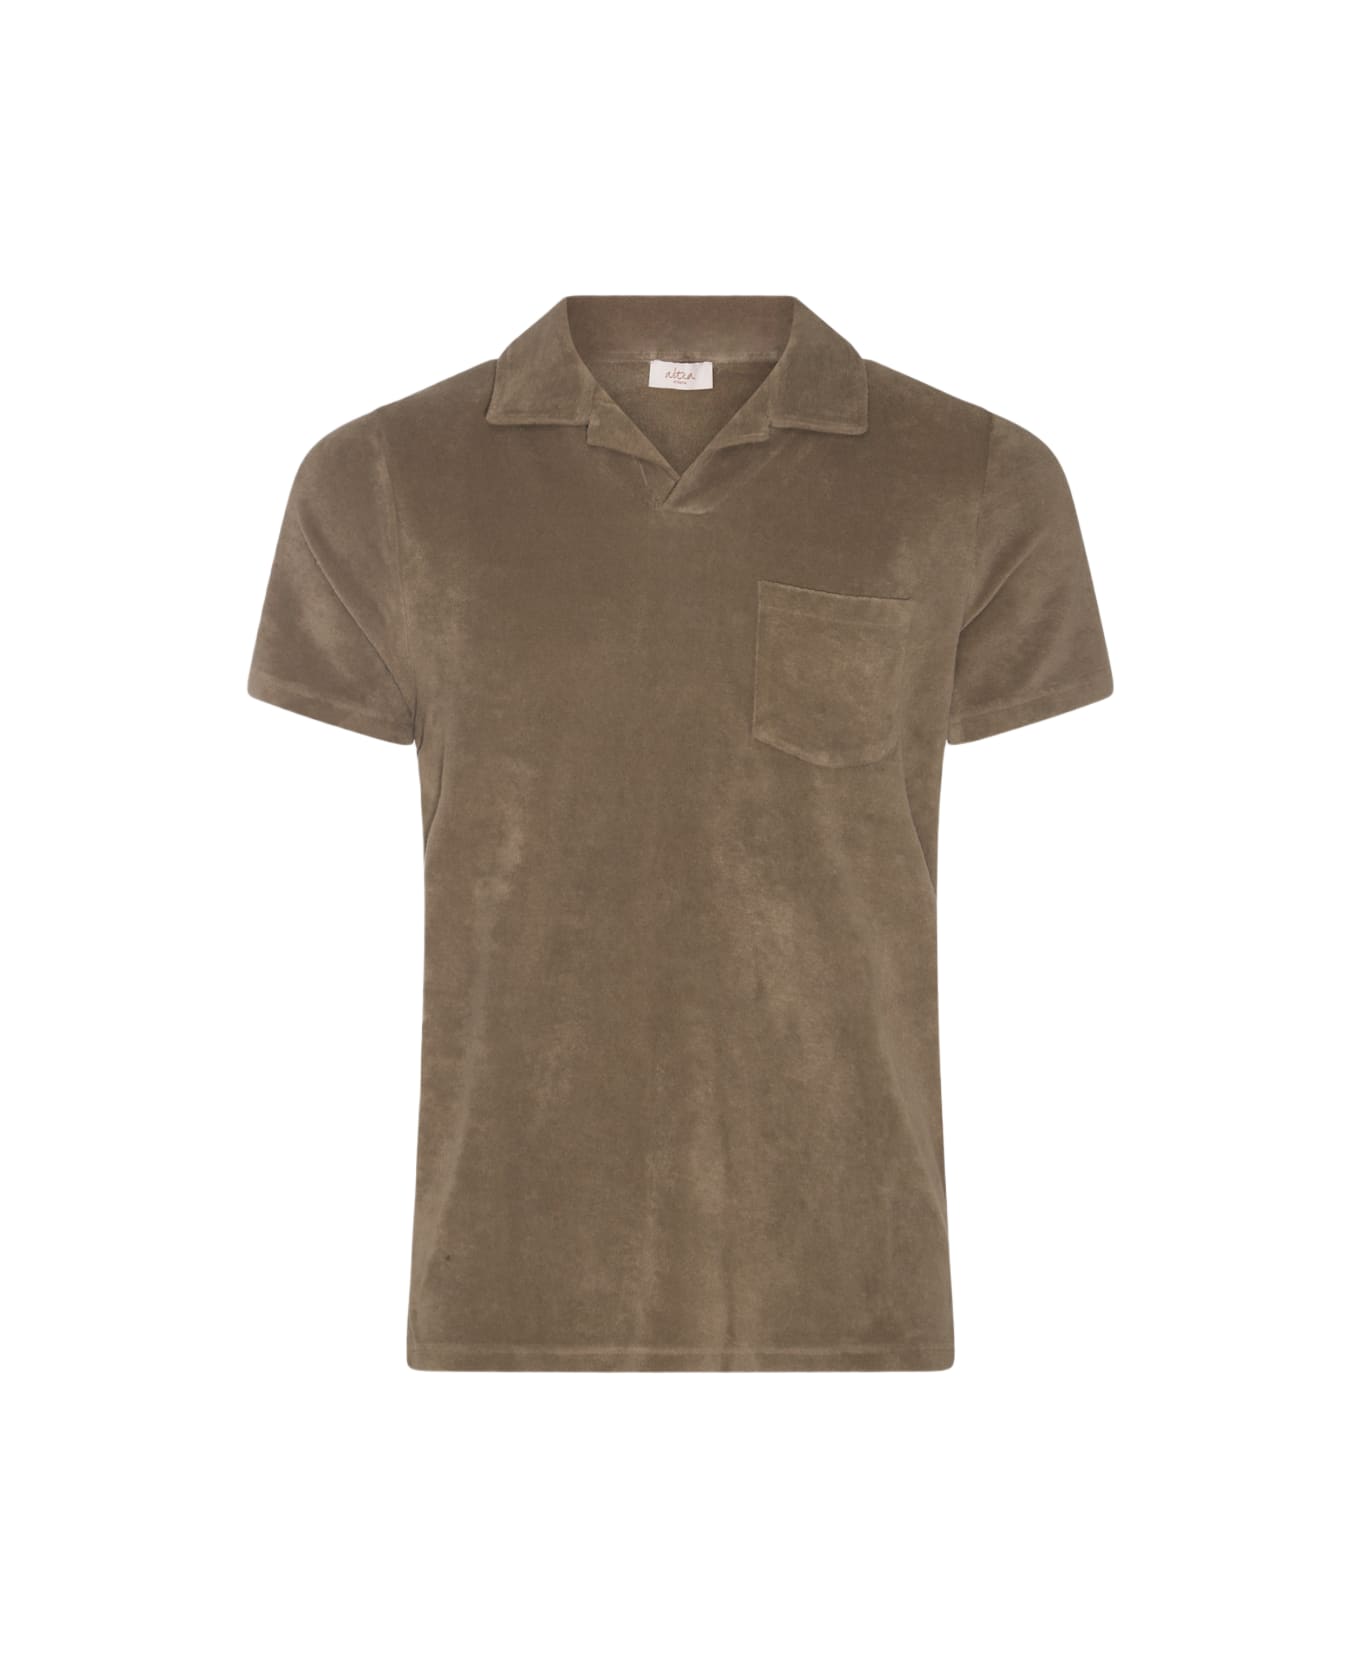 Altea Army Cotton Polo Shirt - Army